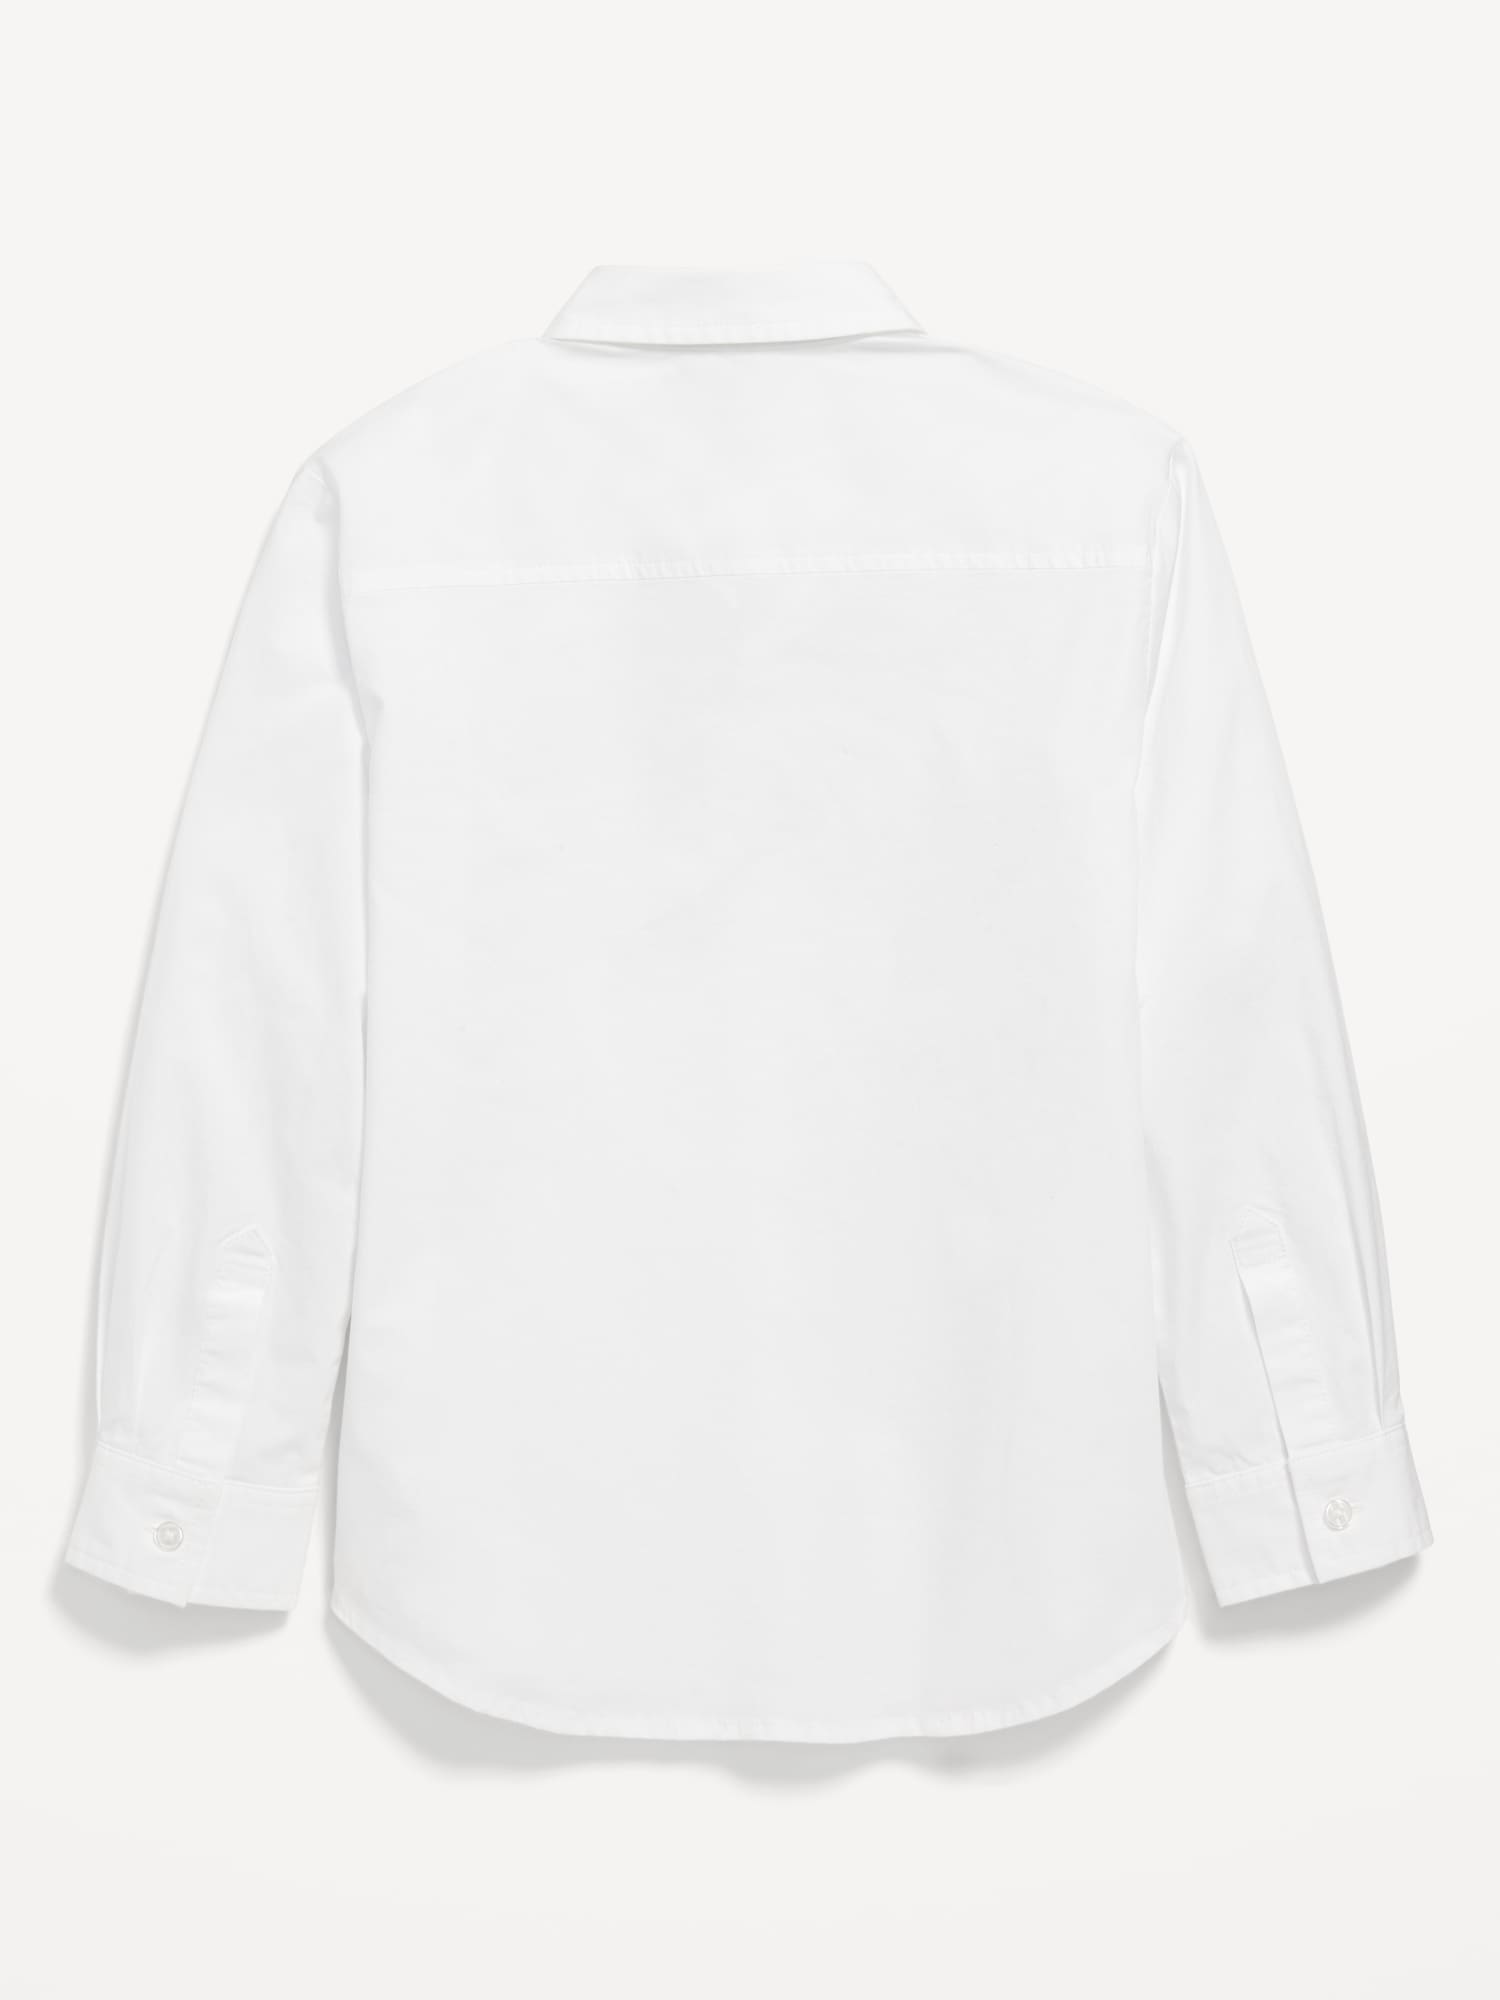 School Uniform Long-Sleeve Shirt for Girls